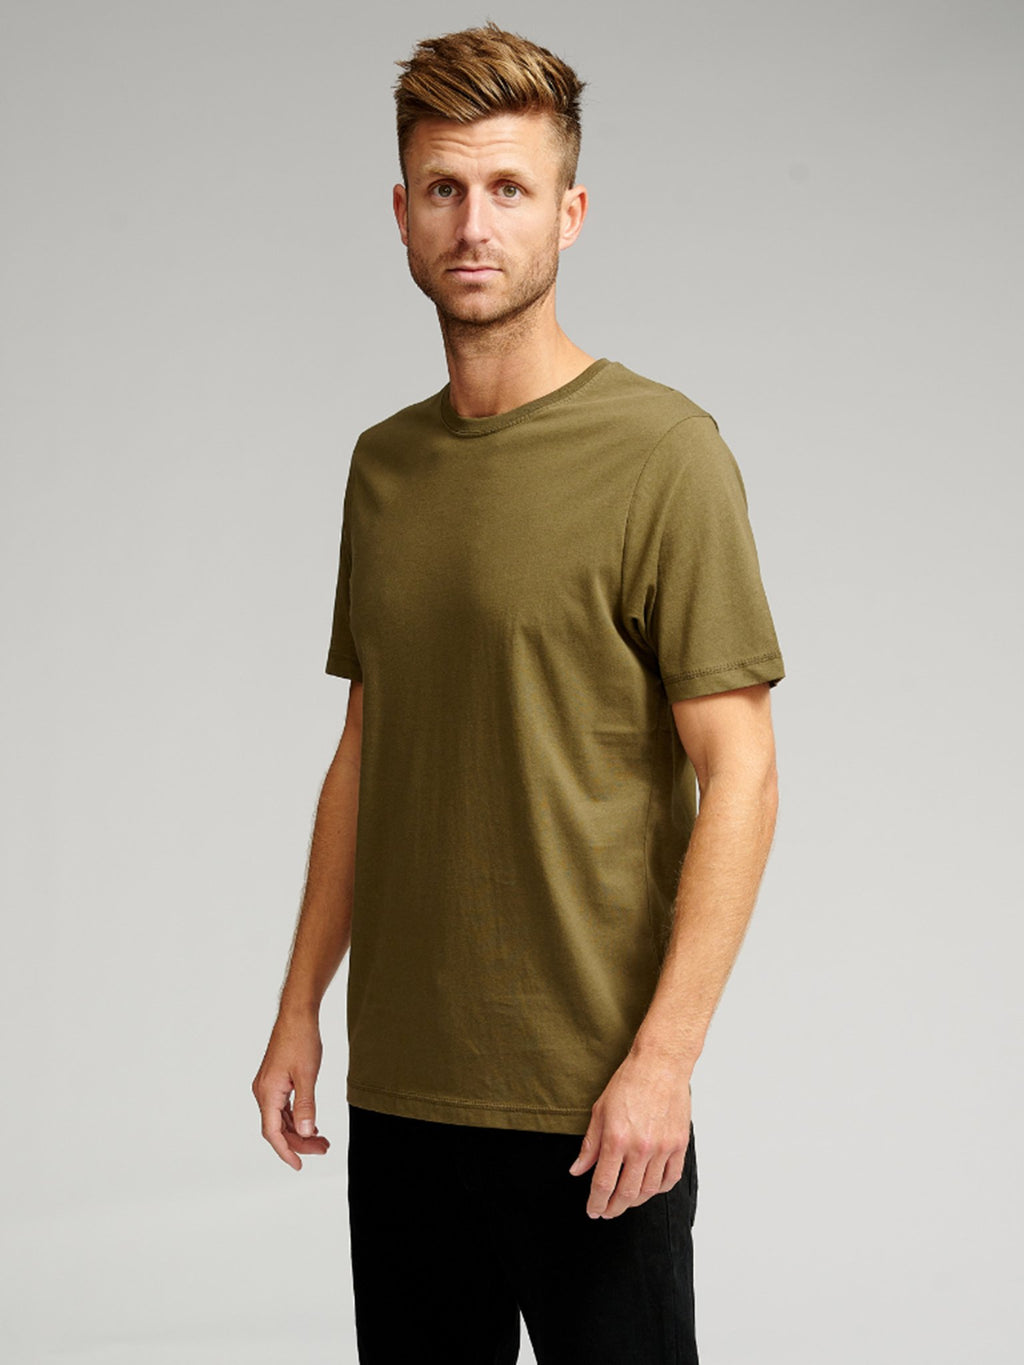 Camiseta básica orgánica - Ejército